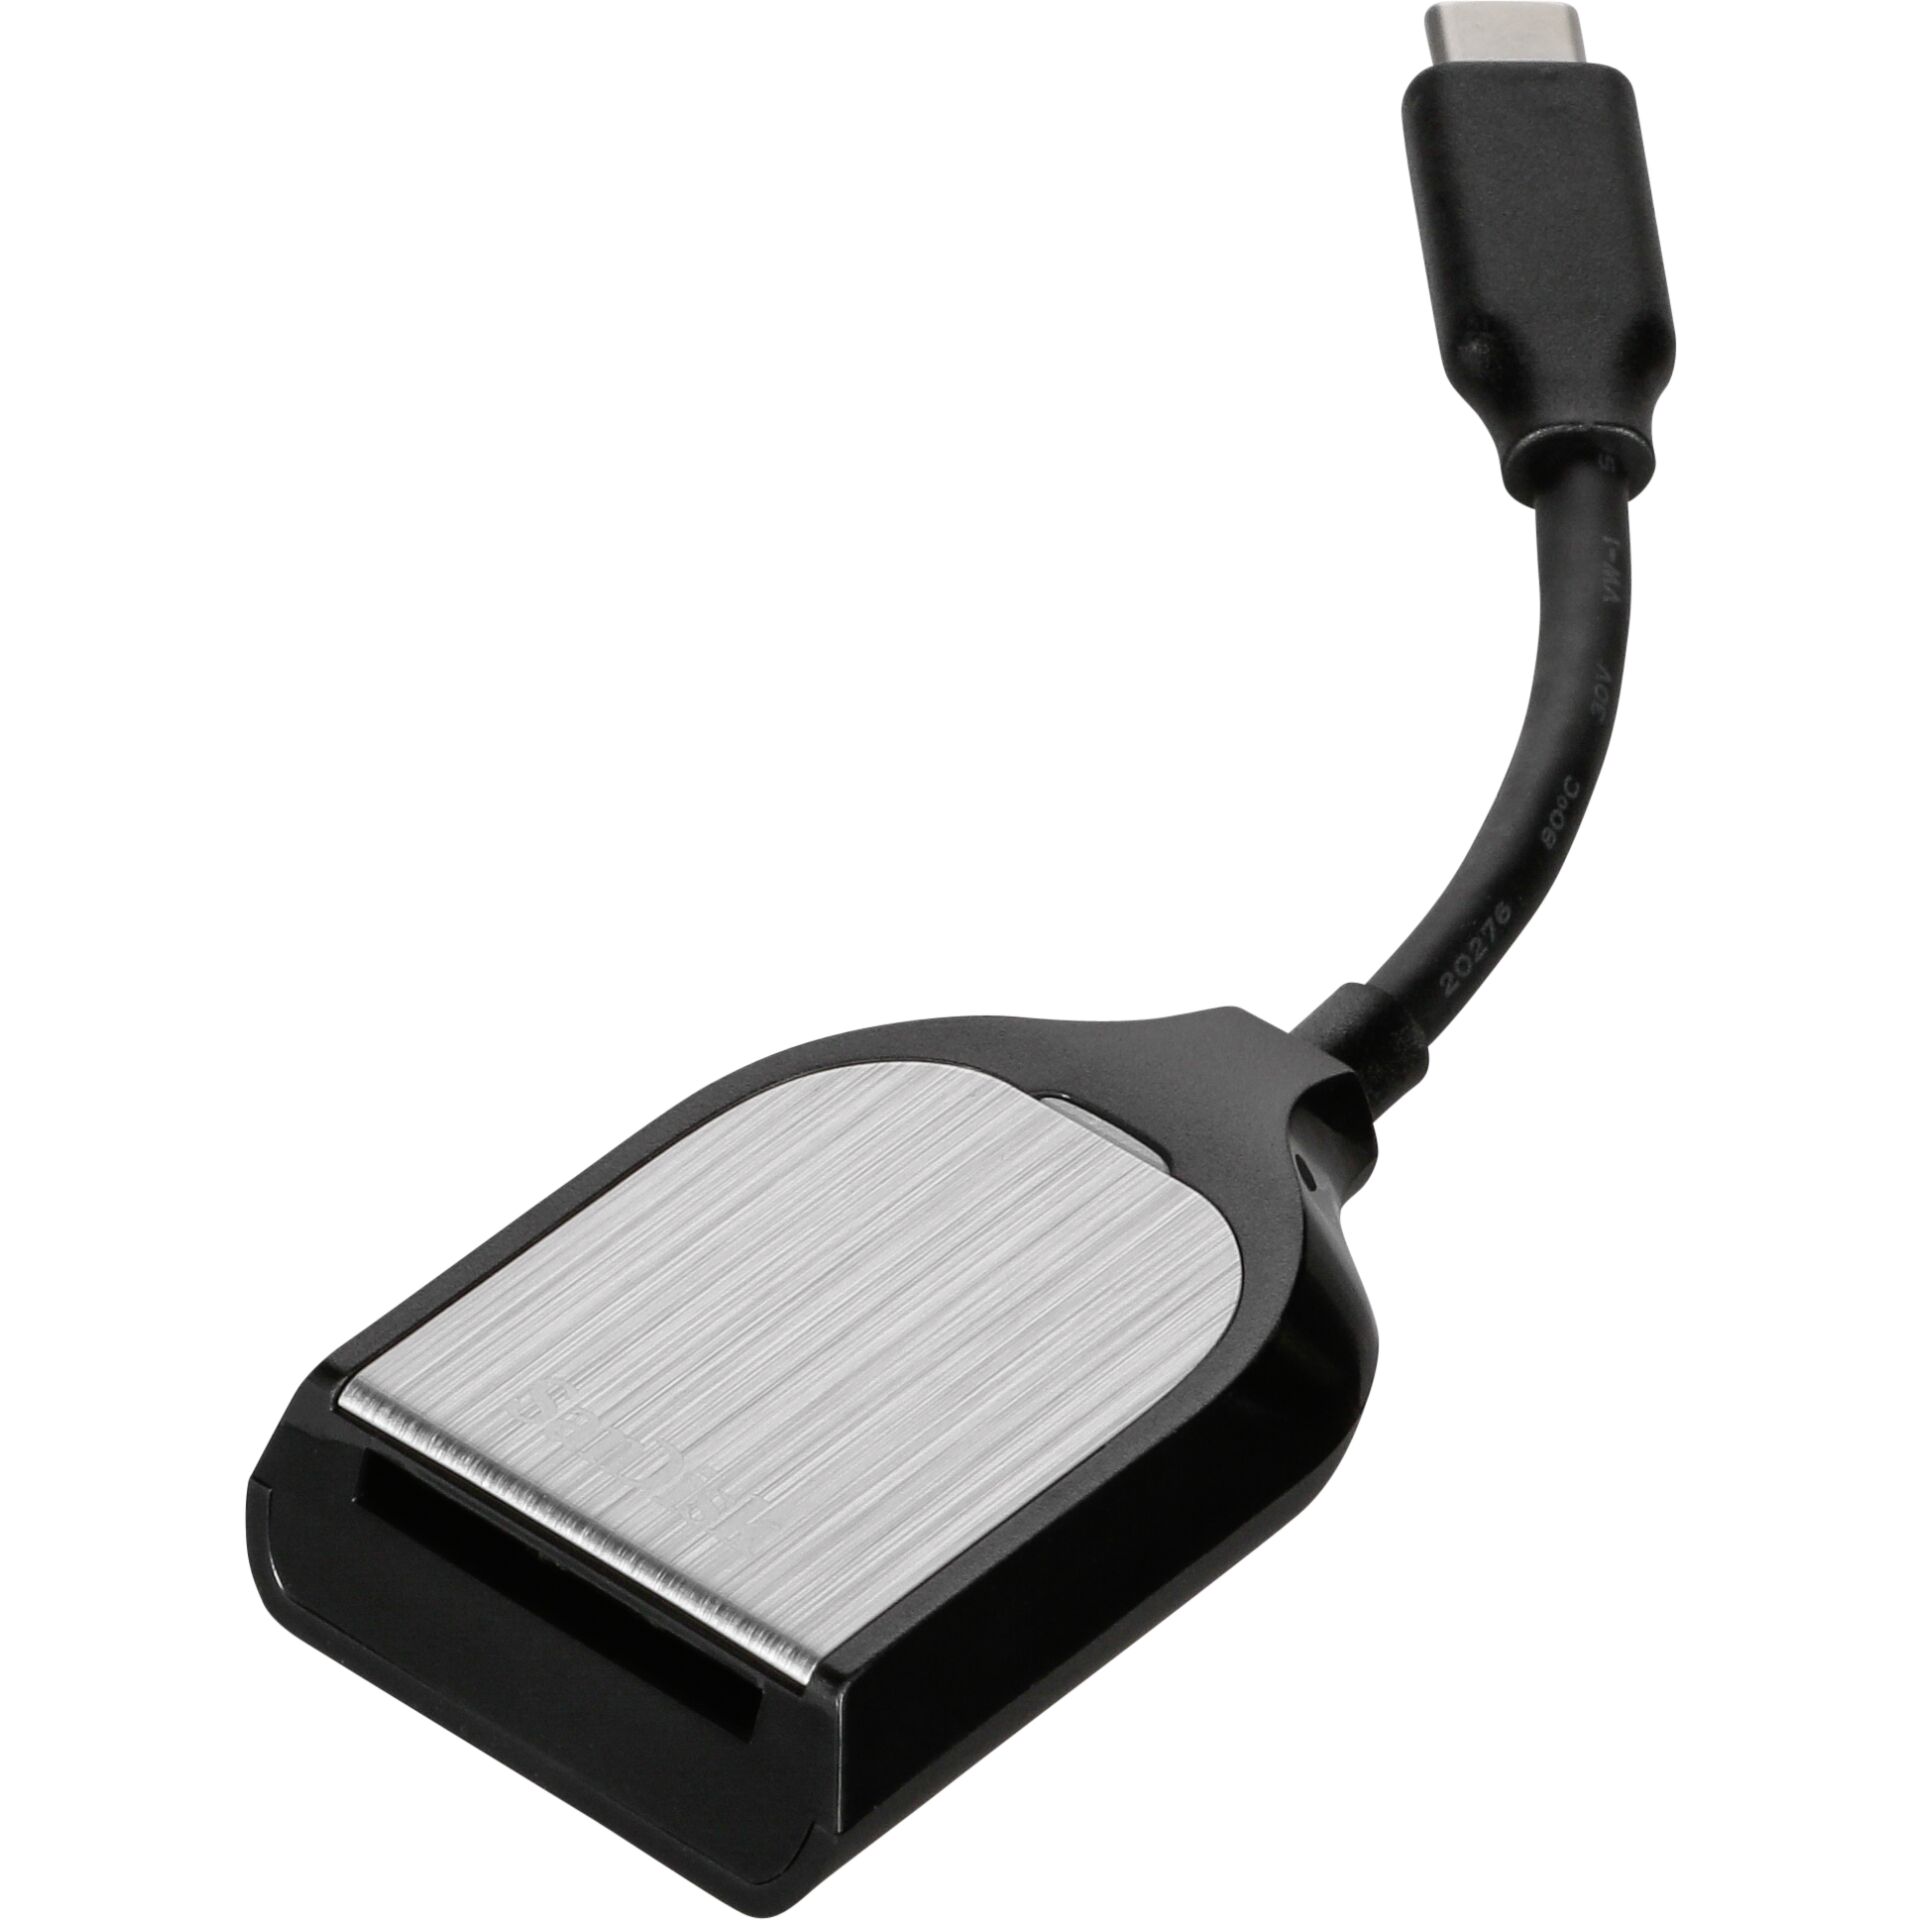 SanDisk Extreme PRO SD UHS-II, USB-C 3.0 Cardreader SD, SDHC UHS-II, SDXC UHS-II